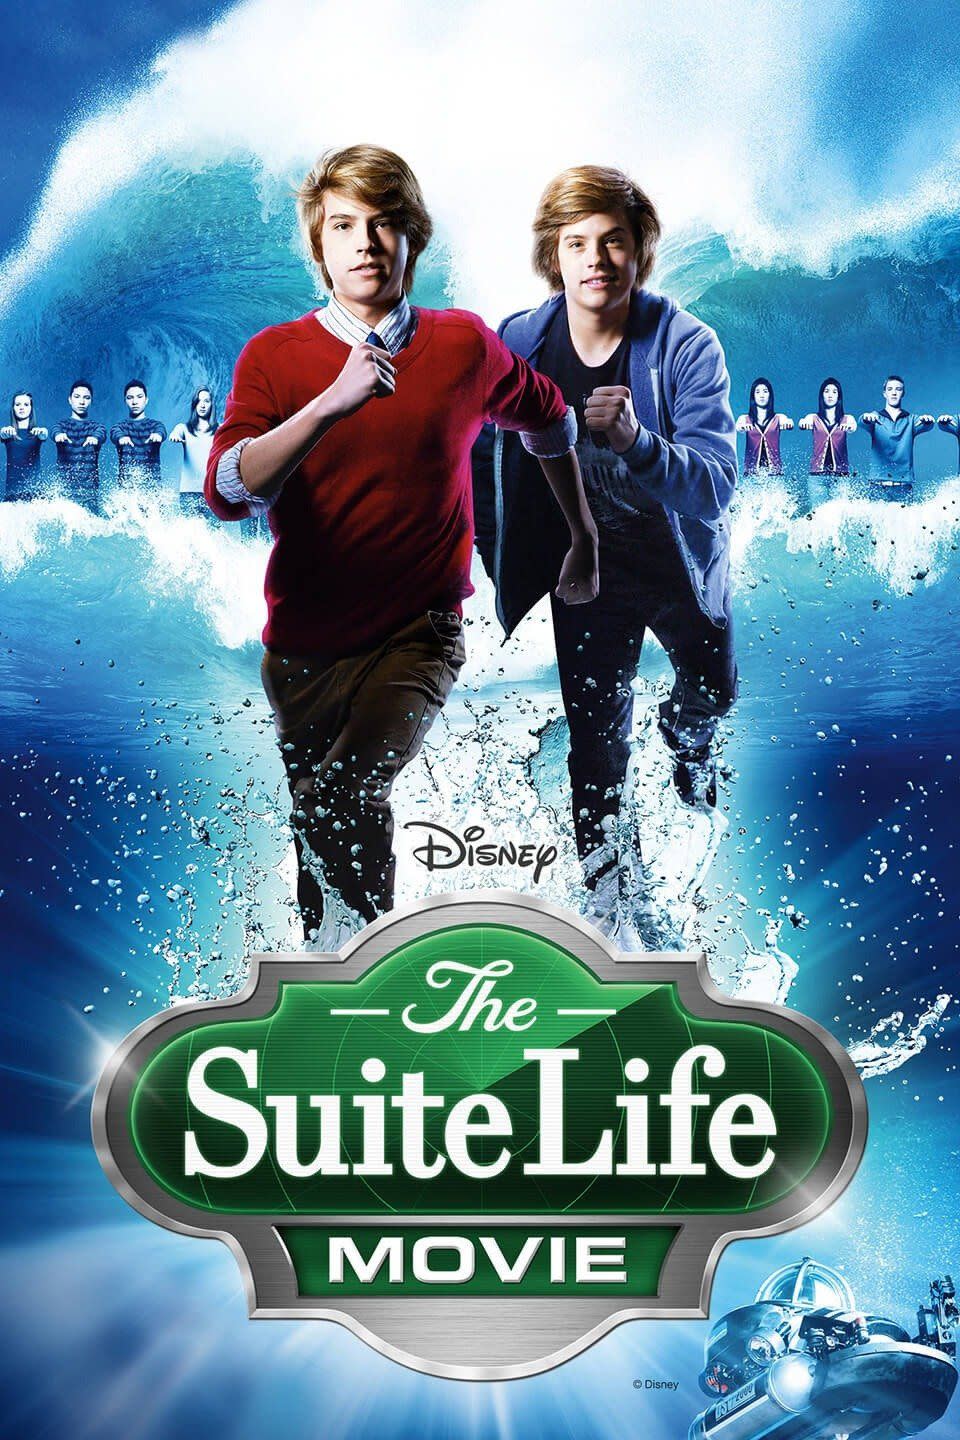 25. <i>The Suite Life Movie</i>